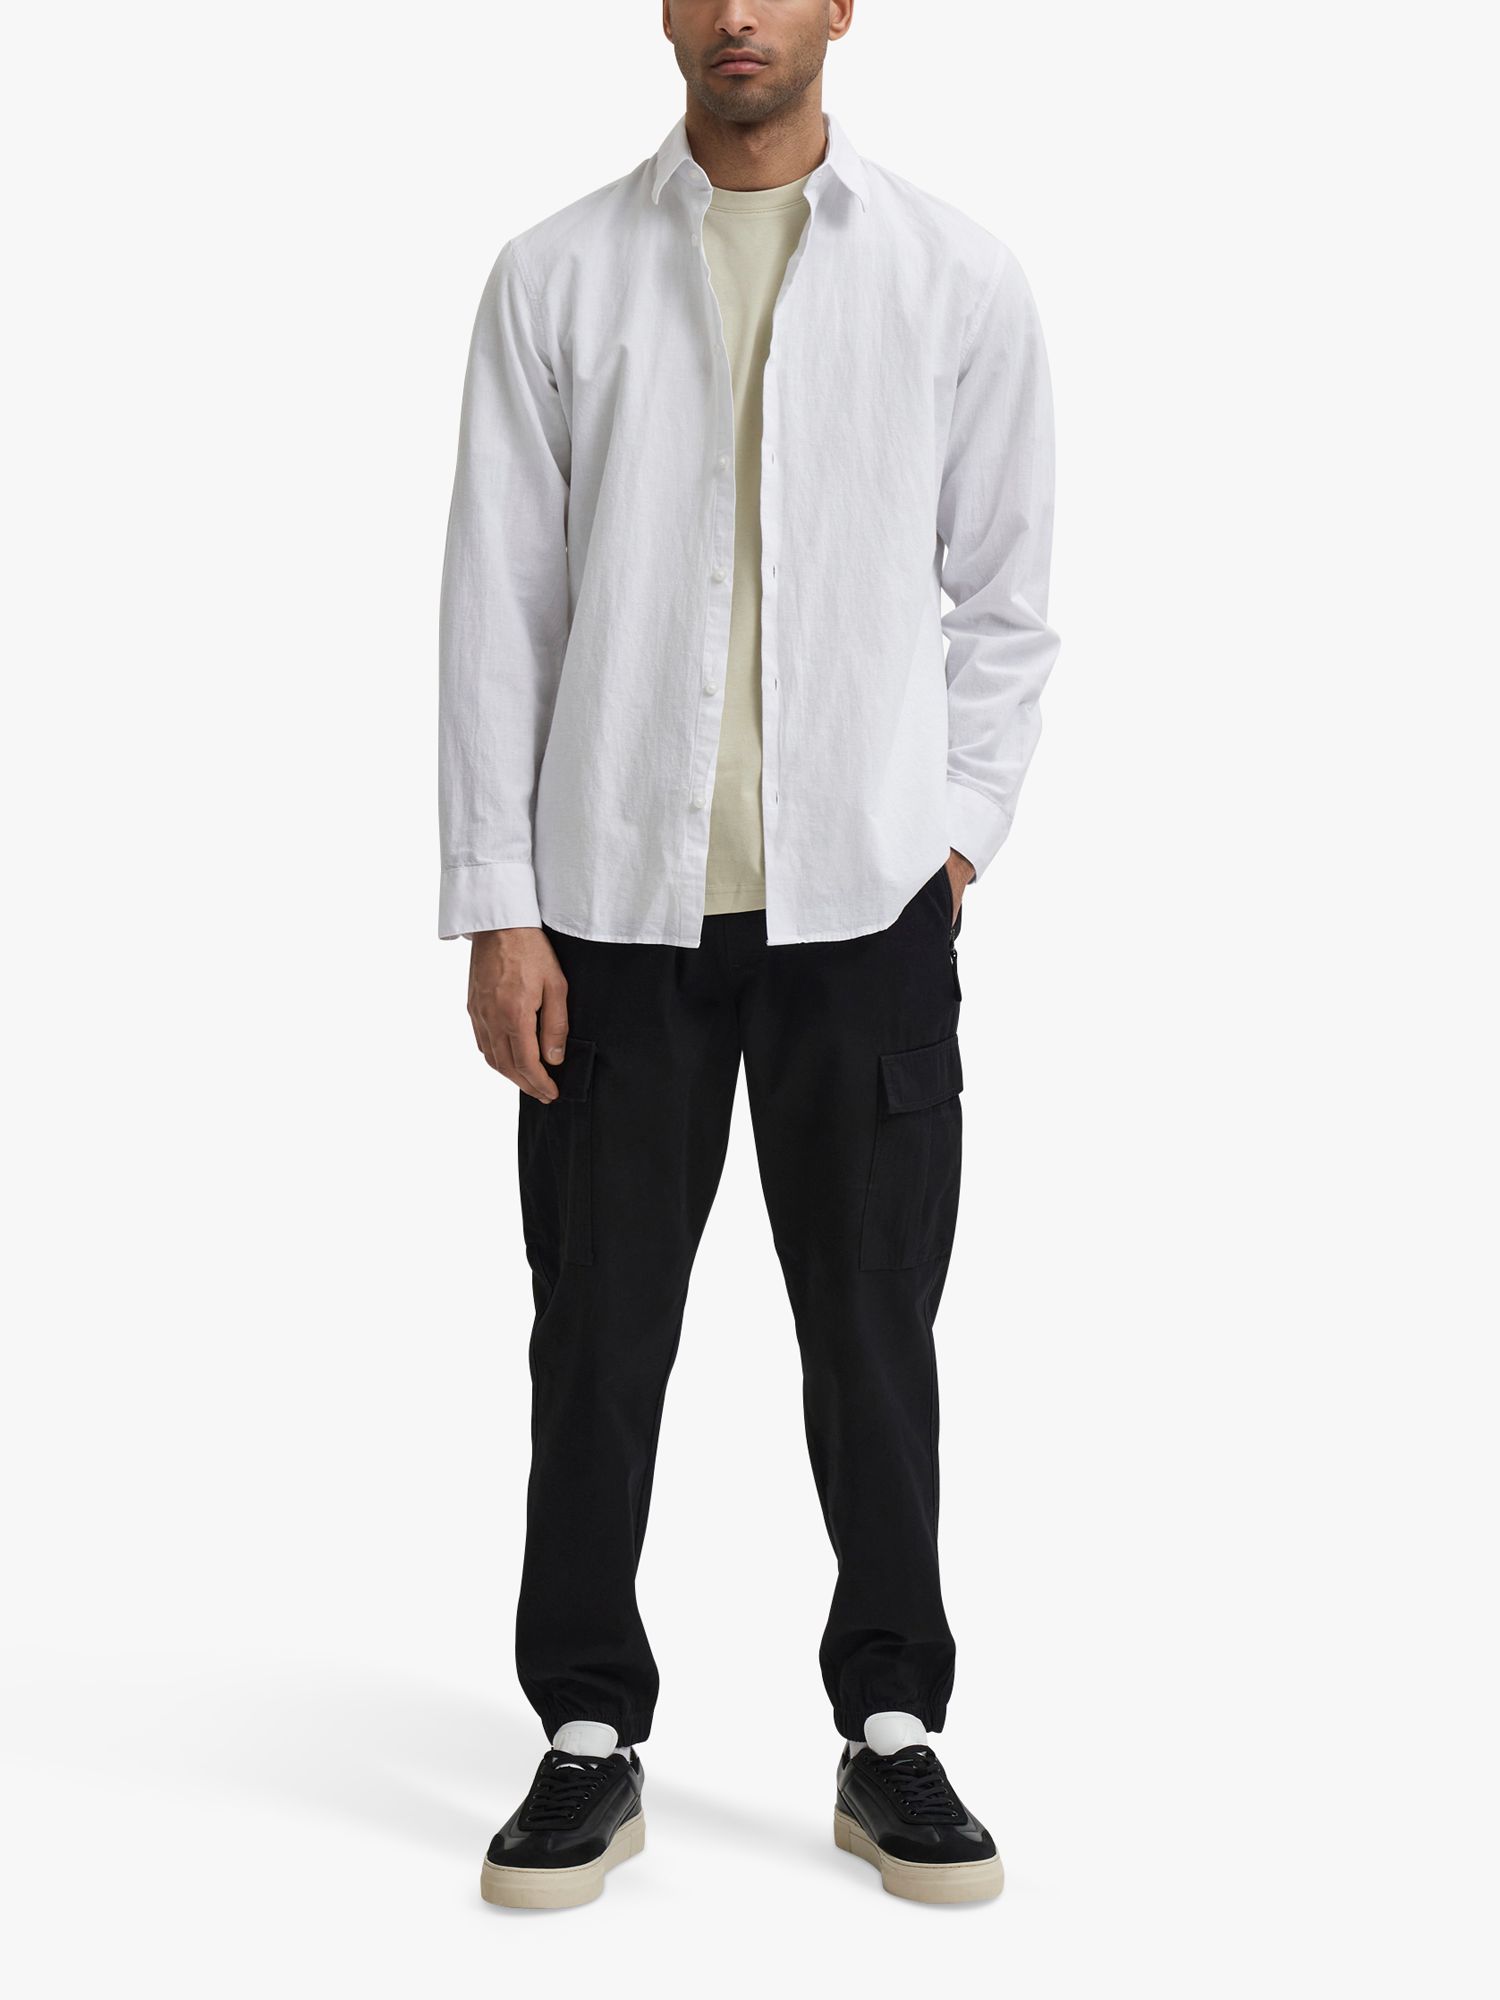 Buy SELECTED HOMME Cotton Linen Blend Shirt Online at johnlewis.com